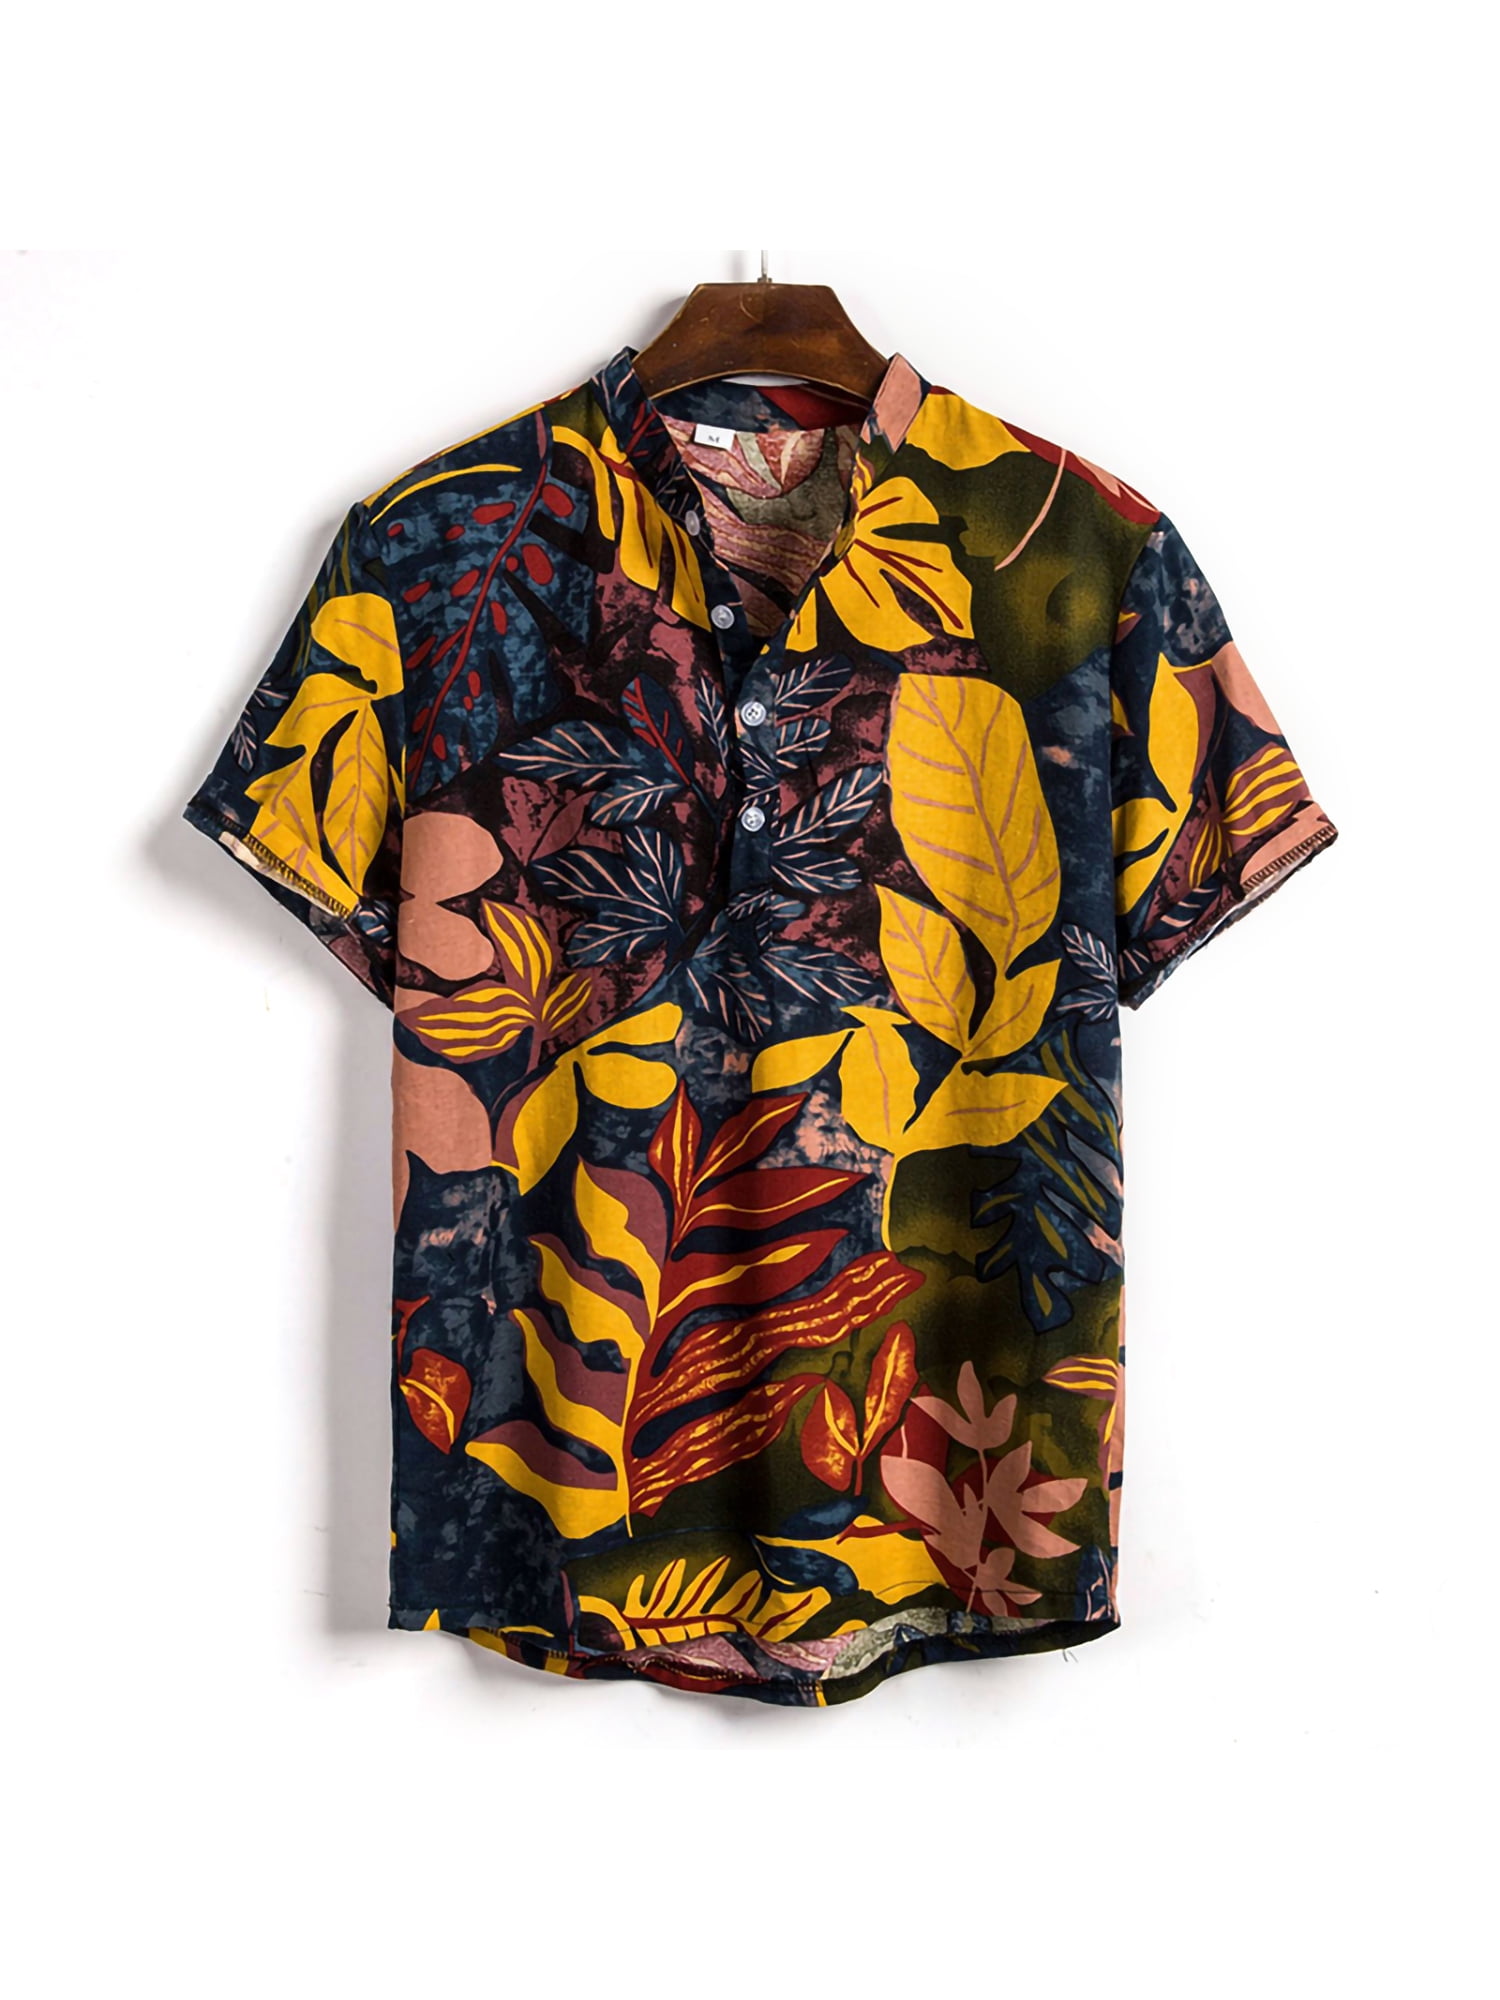 Mens Hawaiian Shirt Short Sleeve Aloha Shirt Beach Party Flower Shirt Holiday Casual Shirts